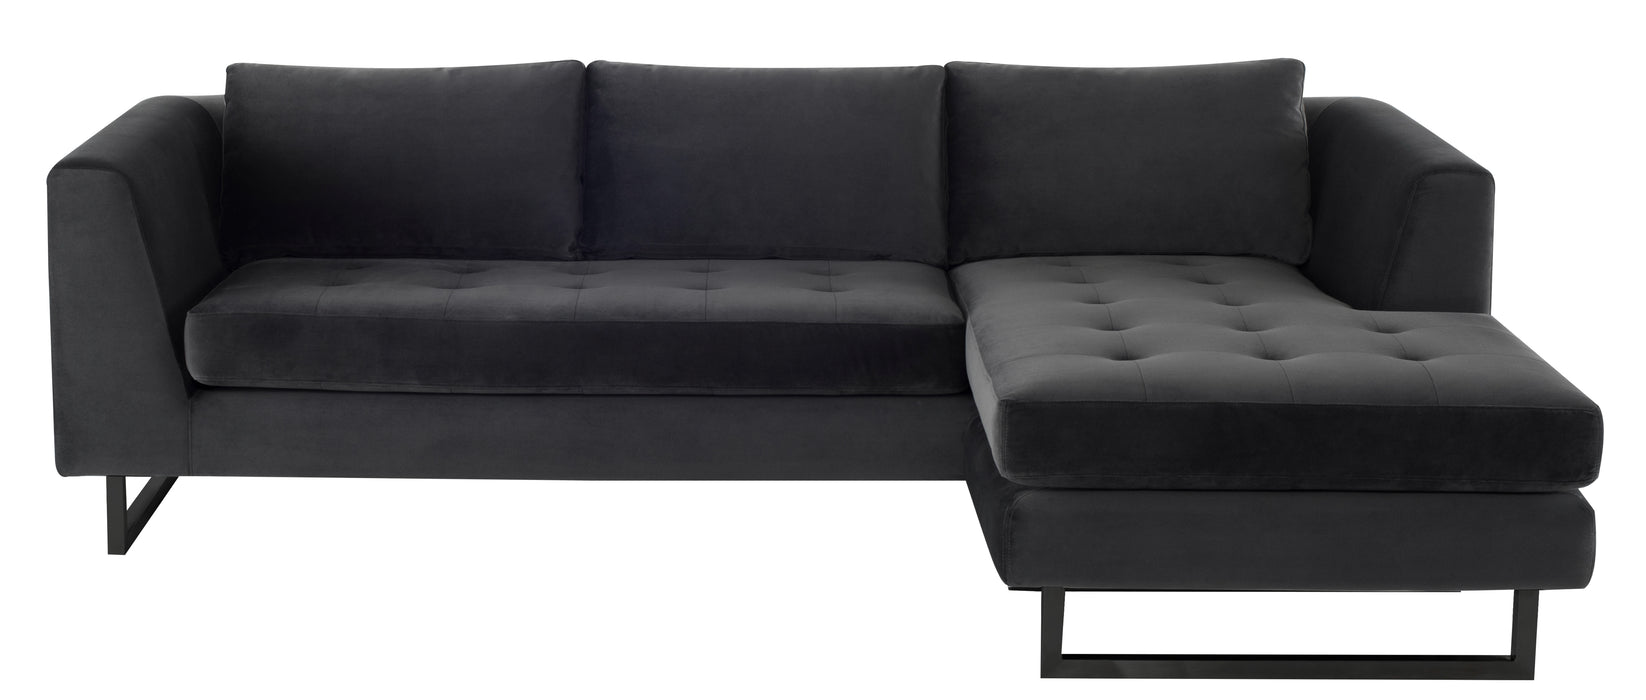 Matthew NL Shadow Grey Sectional Sofa